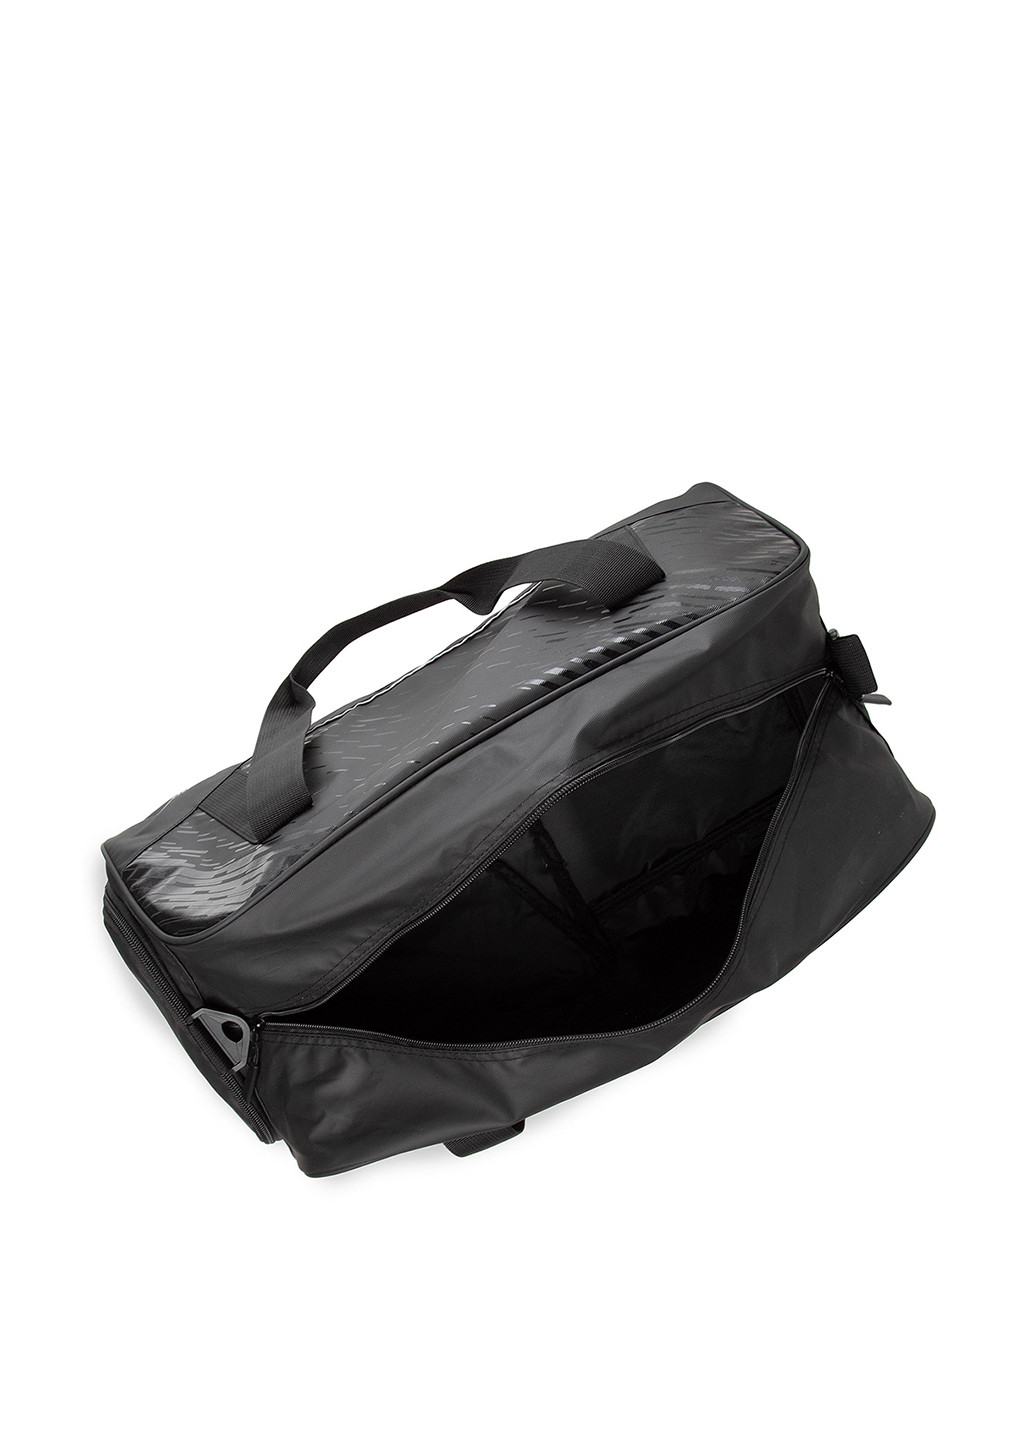 Подорожня сумка Sprandi BST-S-077-10-05 полоска чёрная спортивная